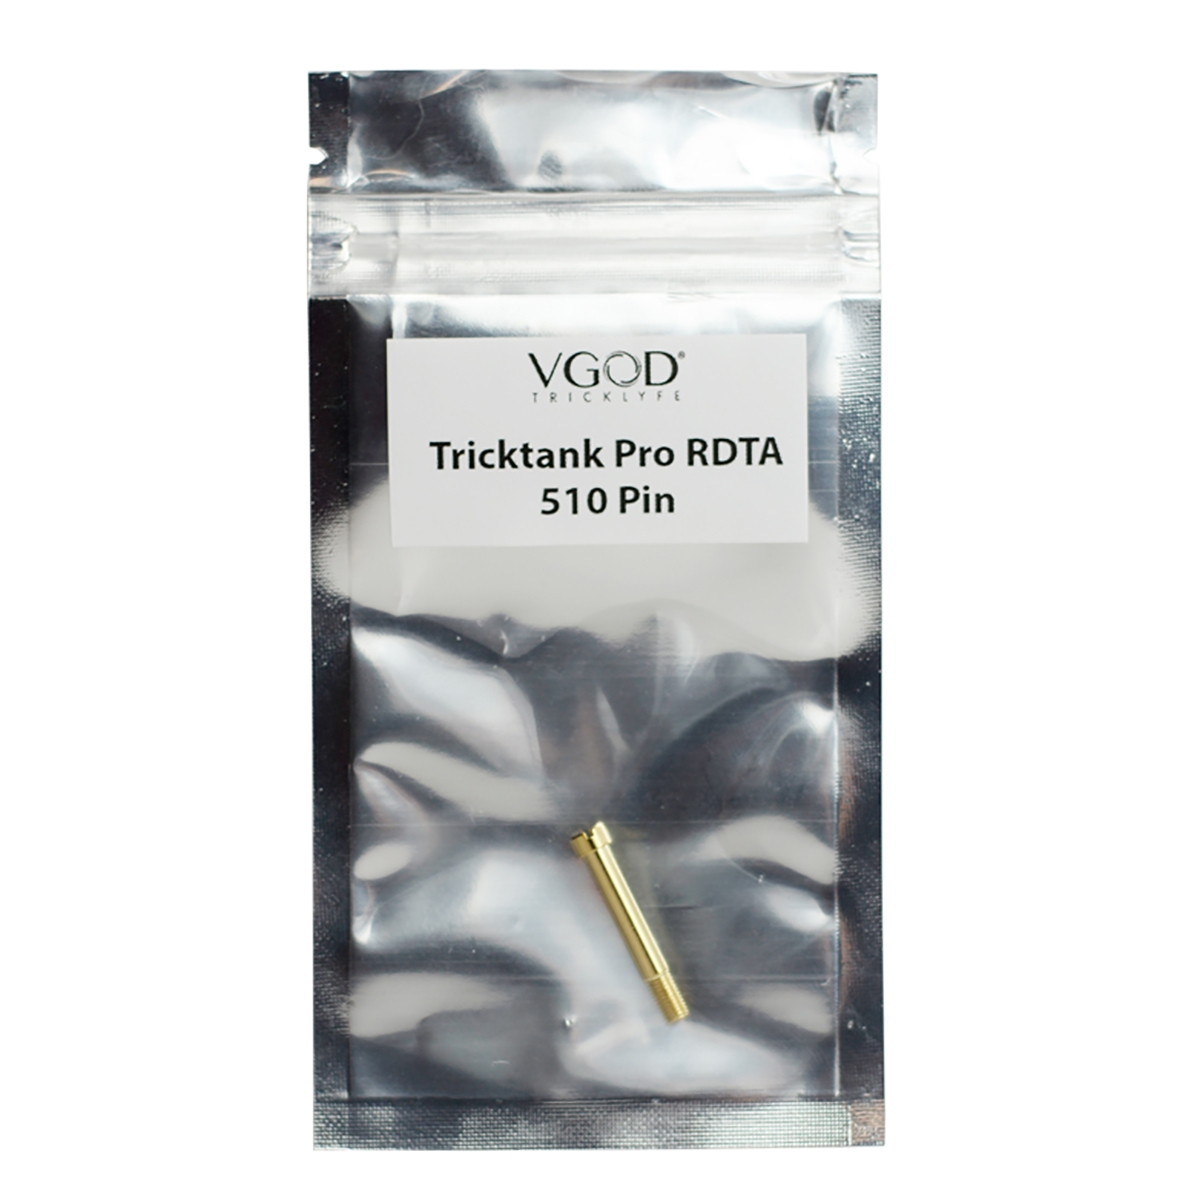 VGOD Tricktank Pro RDTA 510 Pin